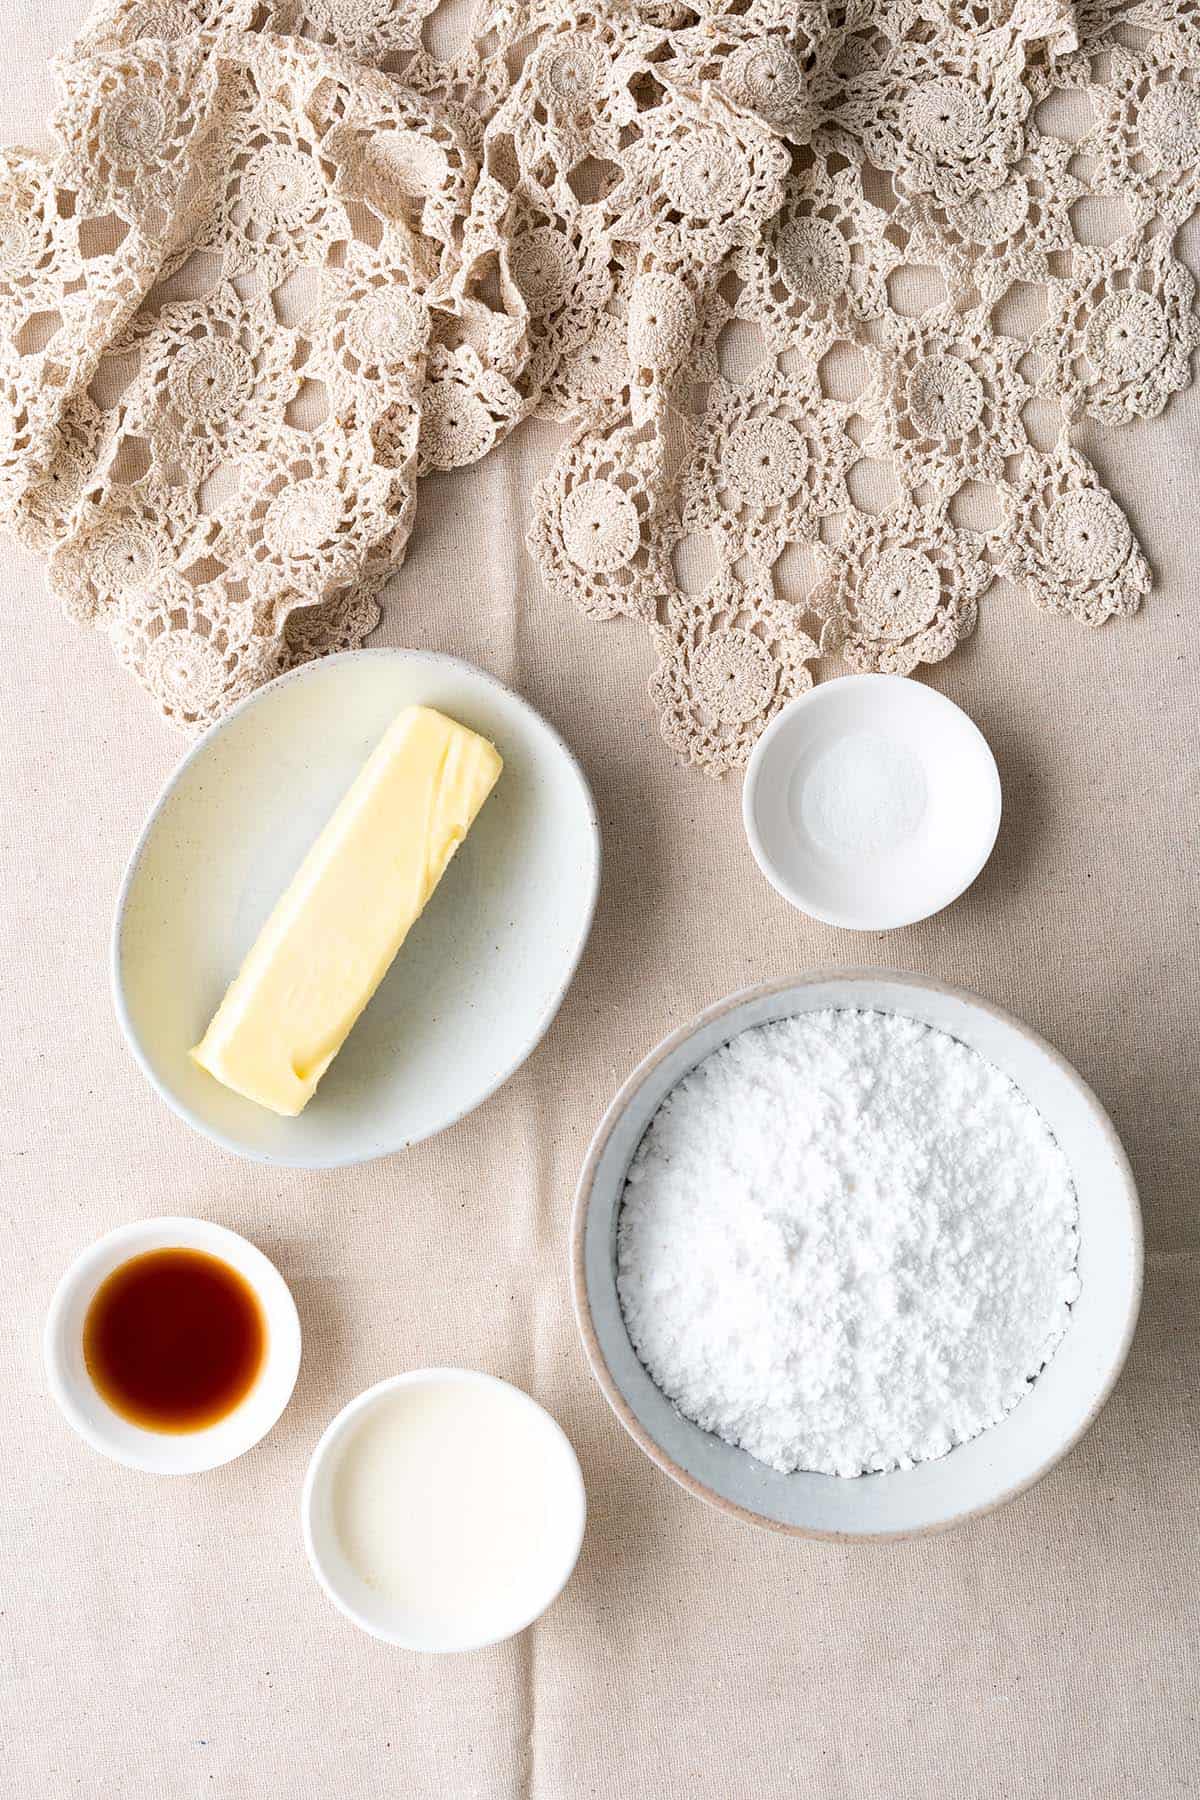 vanilla buttercream ingredients